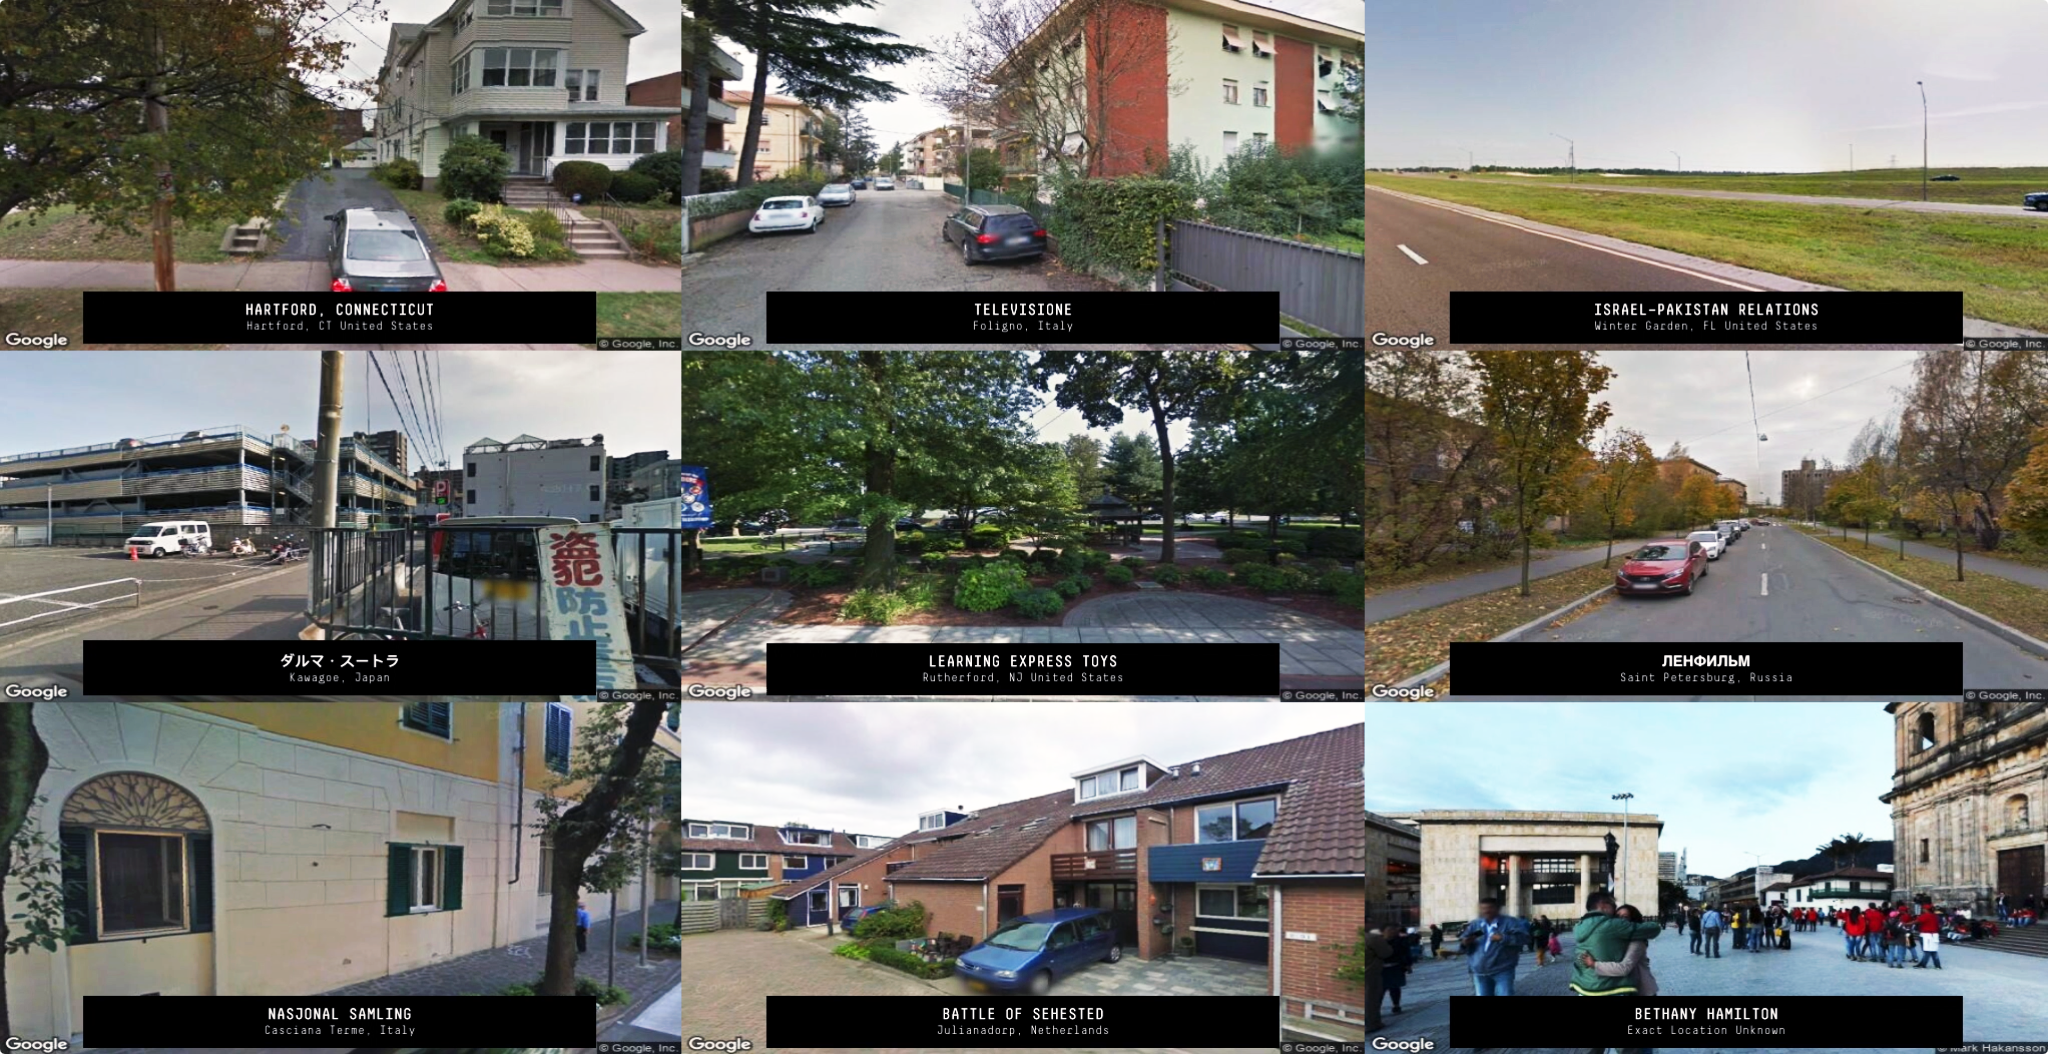 anonymous-wikipedia-edits-google-street-view.jpg